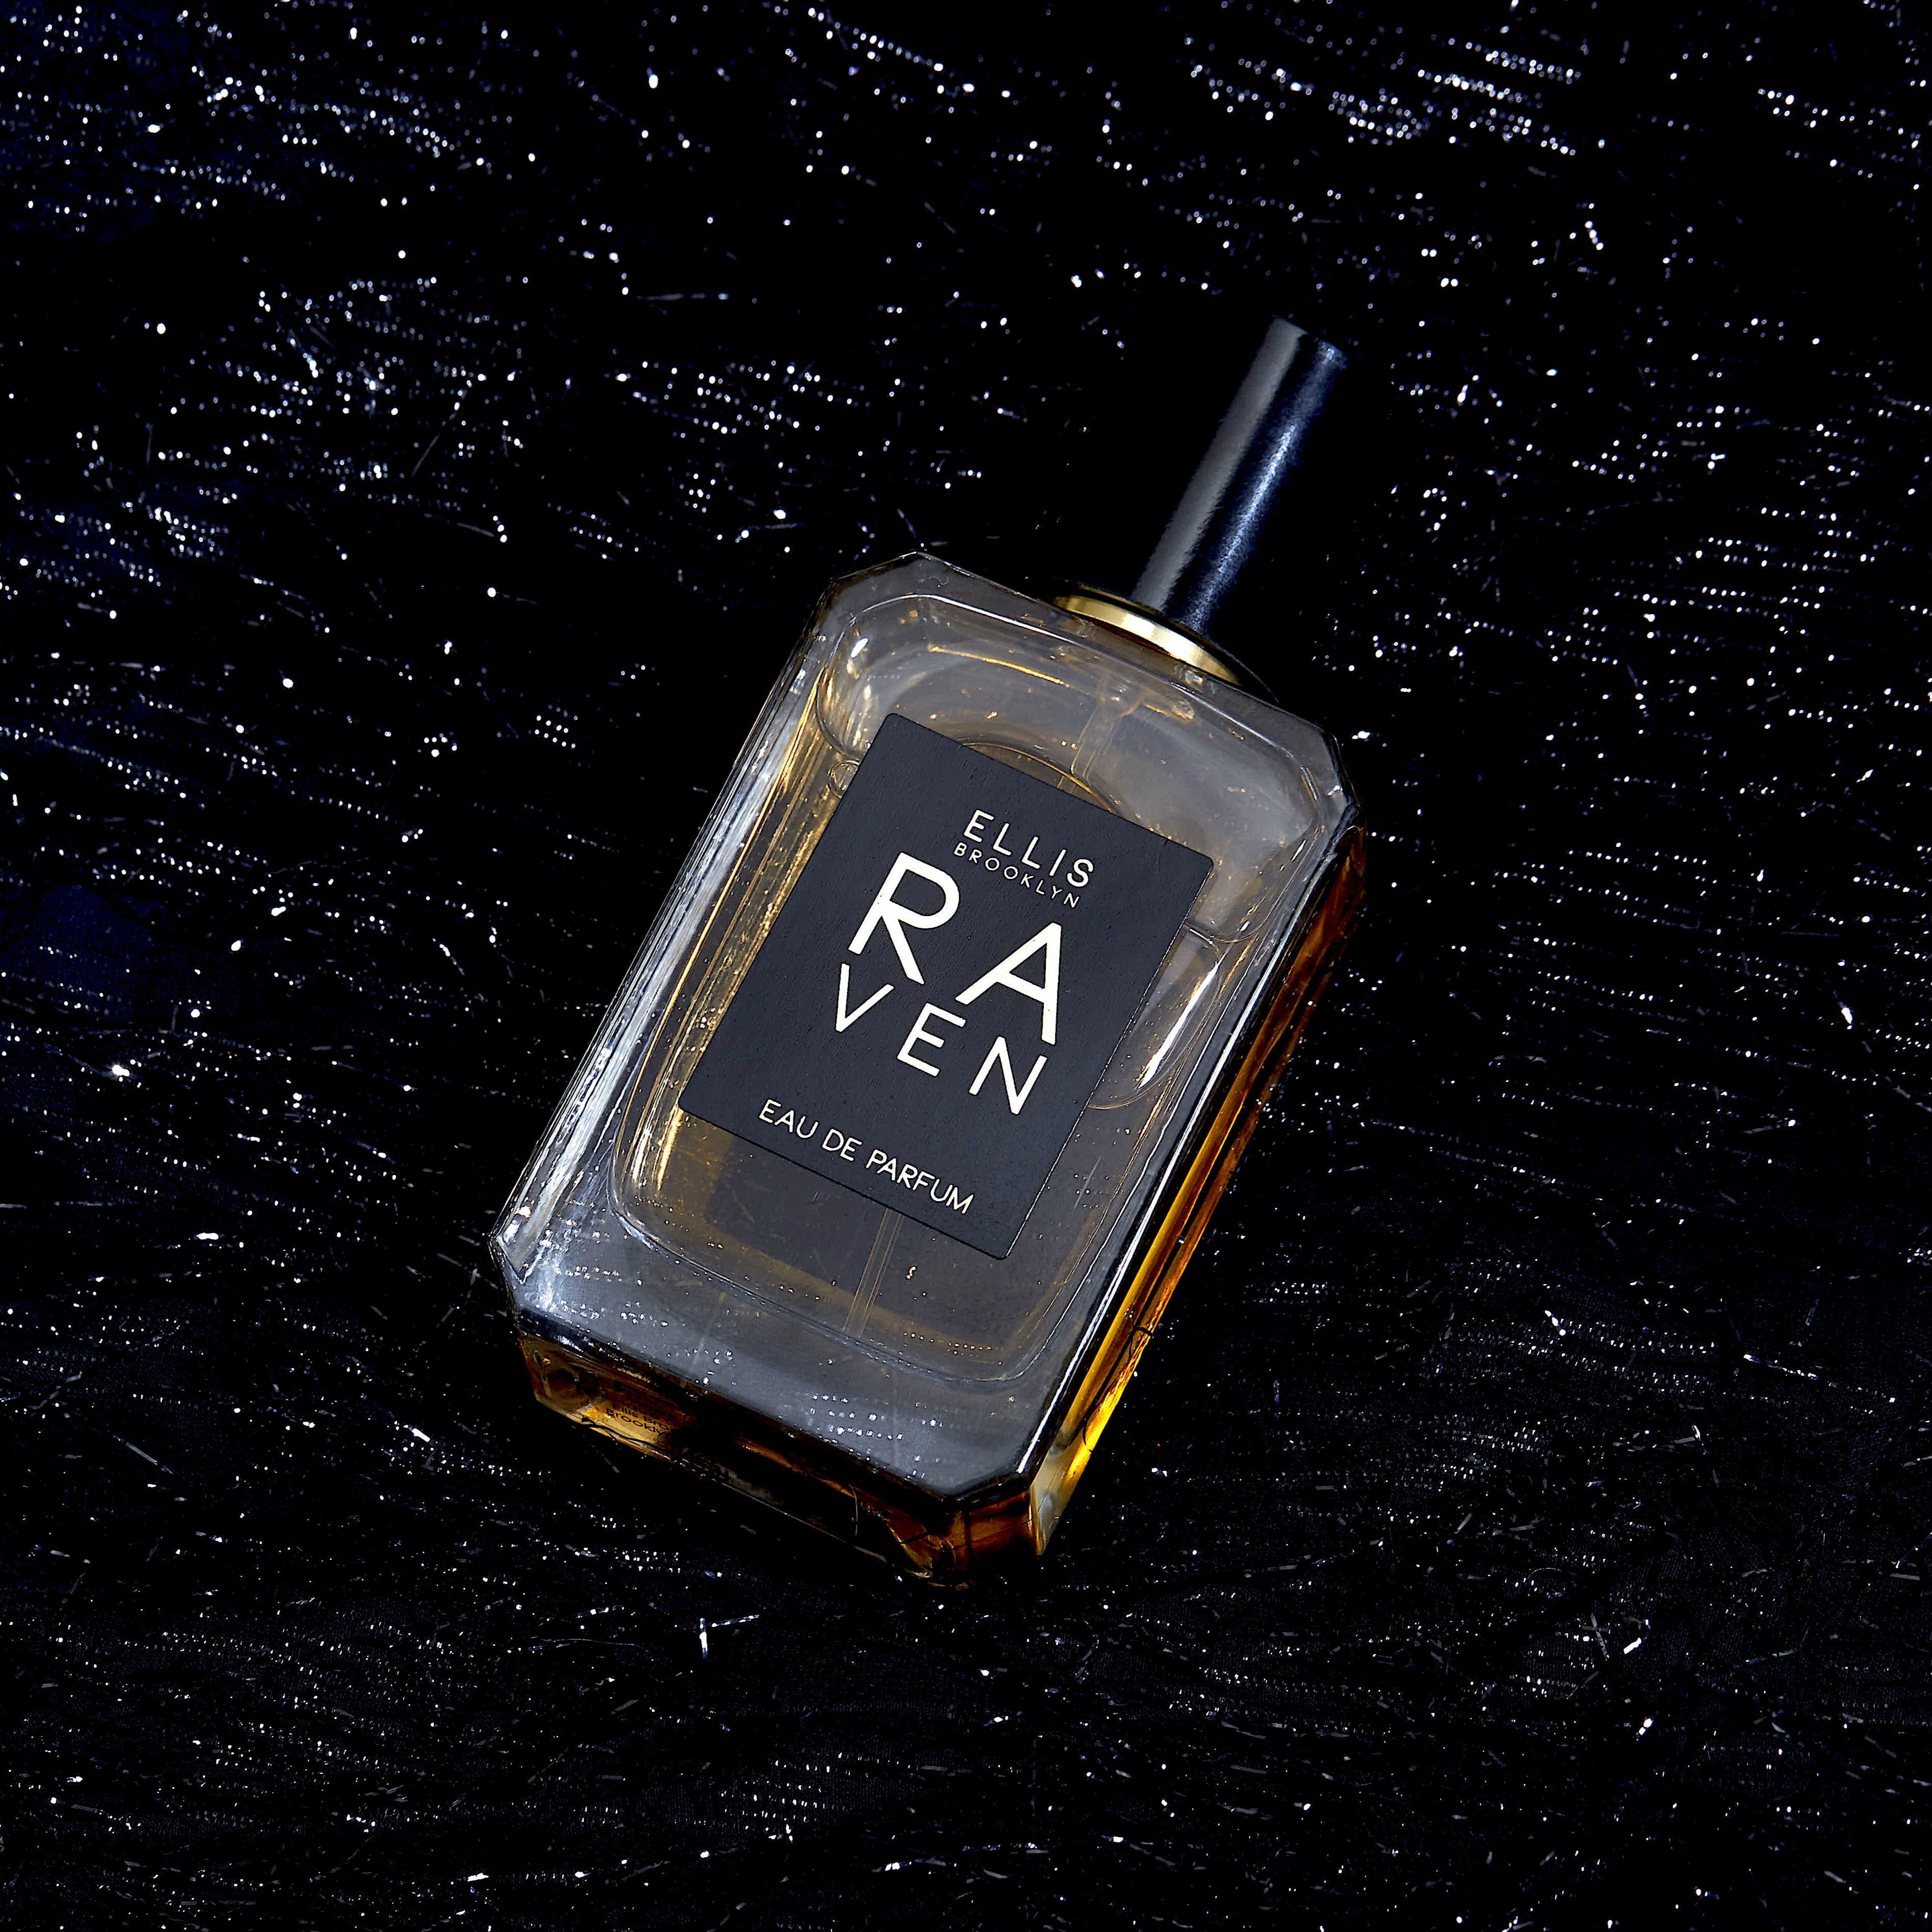 Chanel No 5 Eau de Parfum Perfume Sample Spray Travel Vial 1.5ml